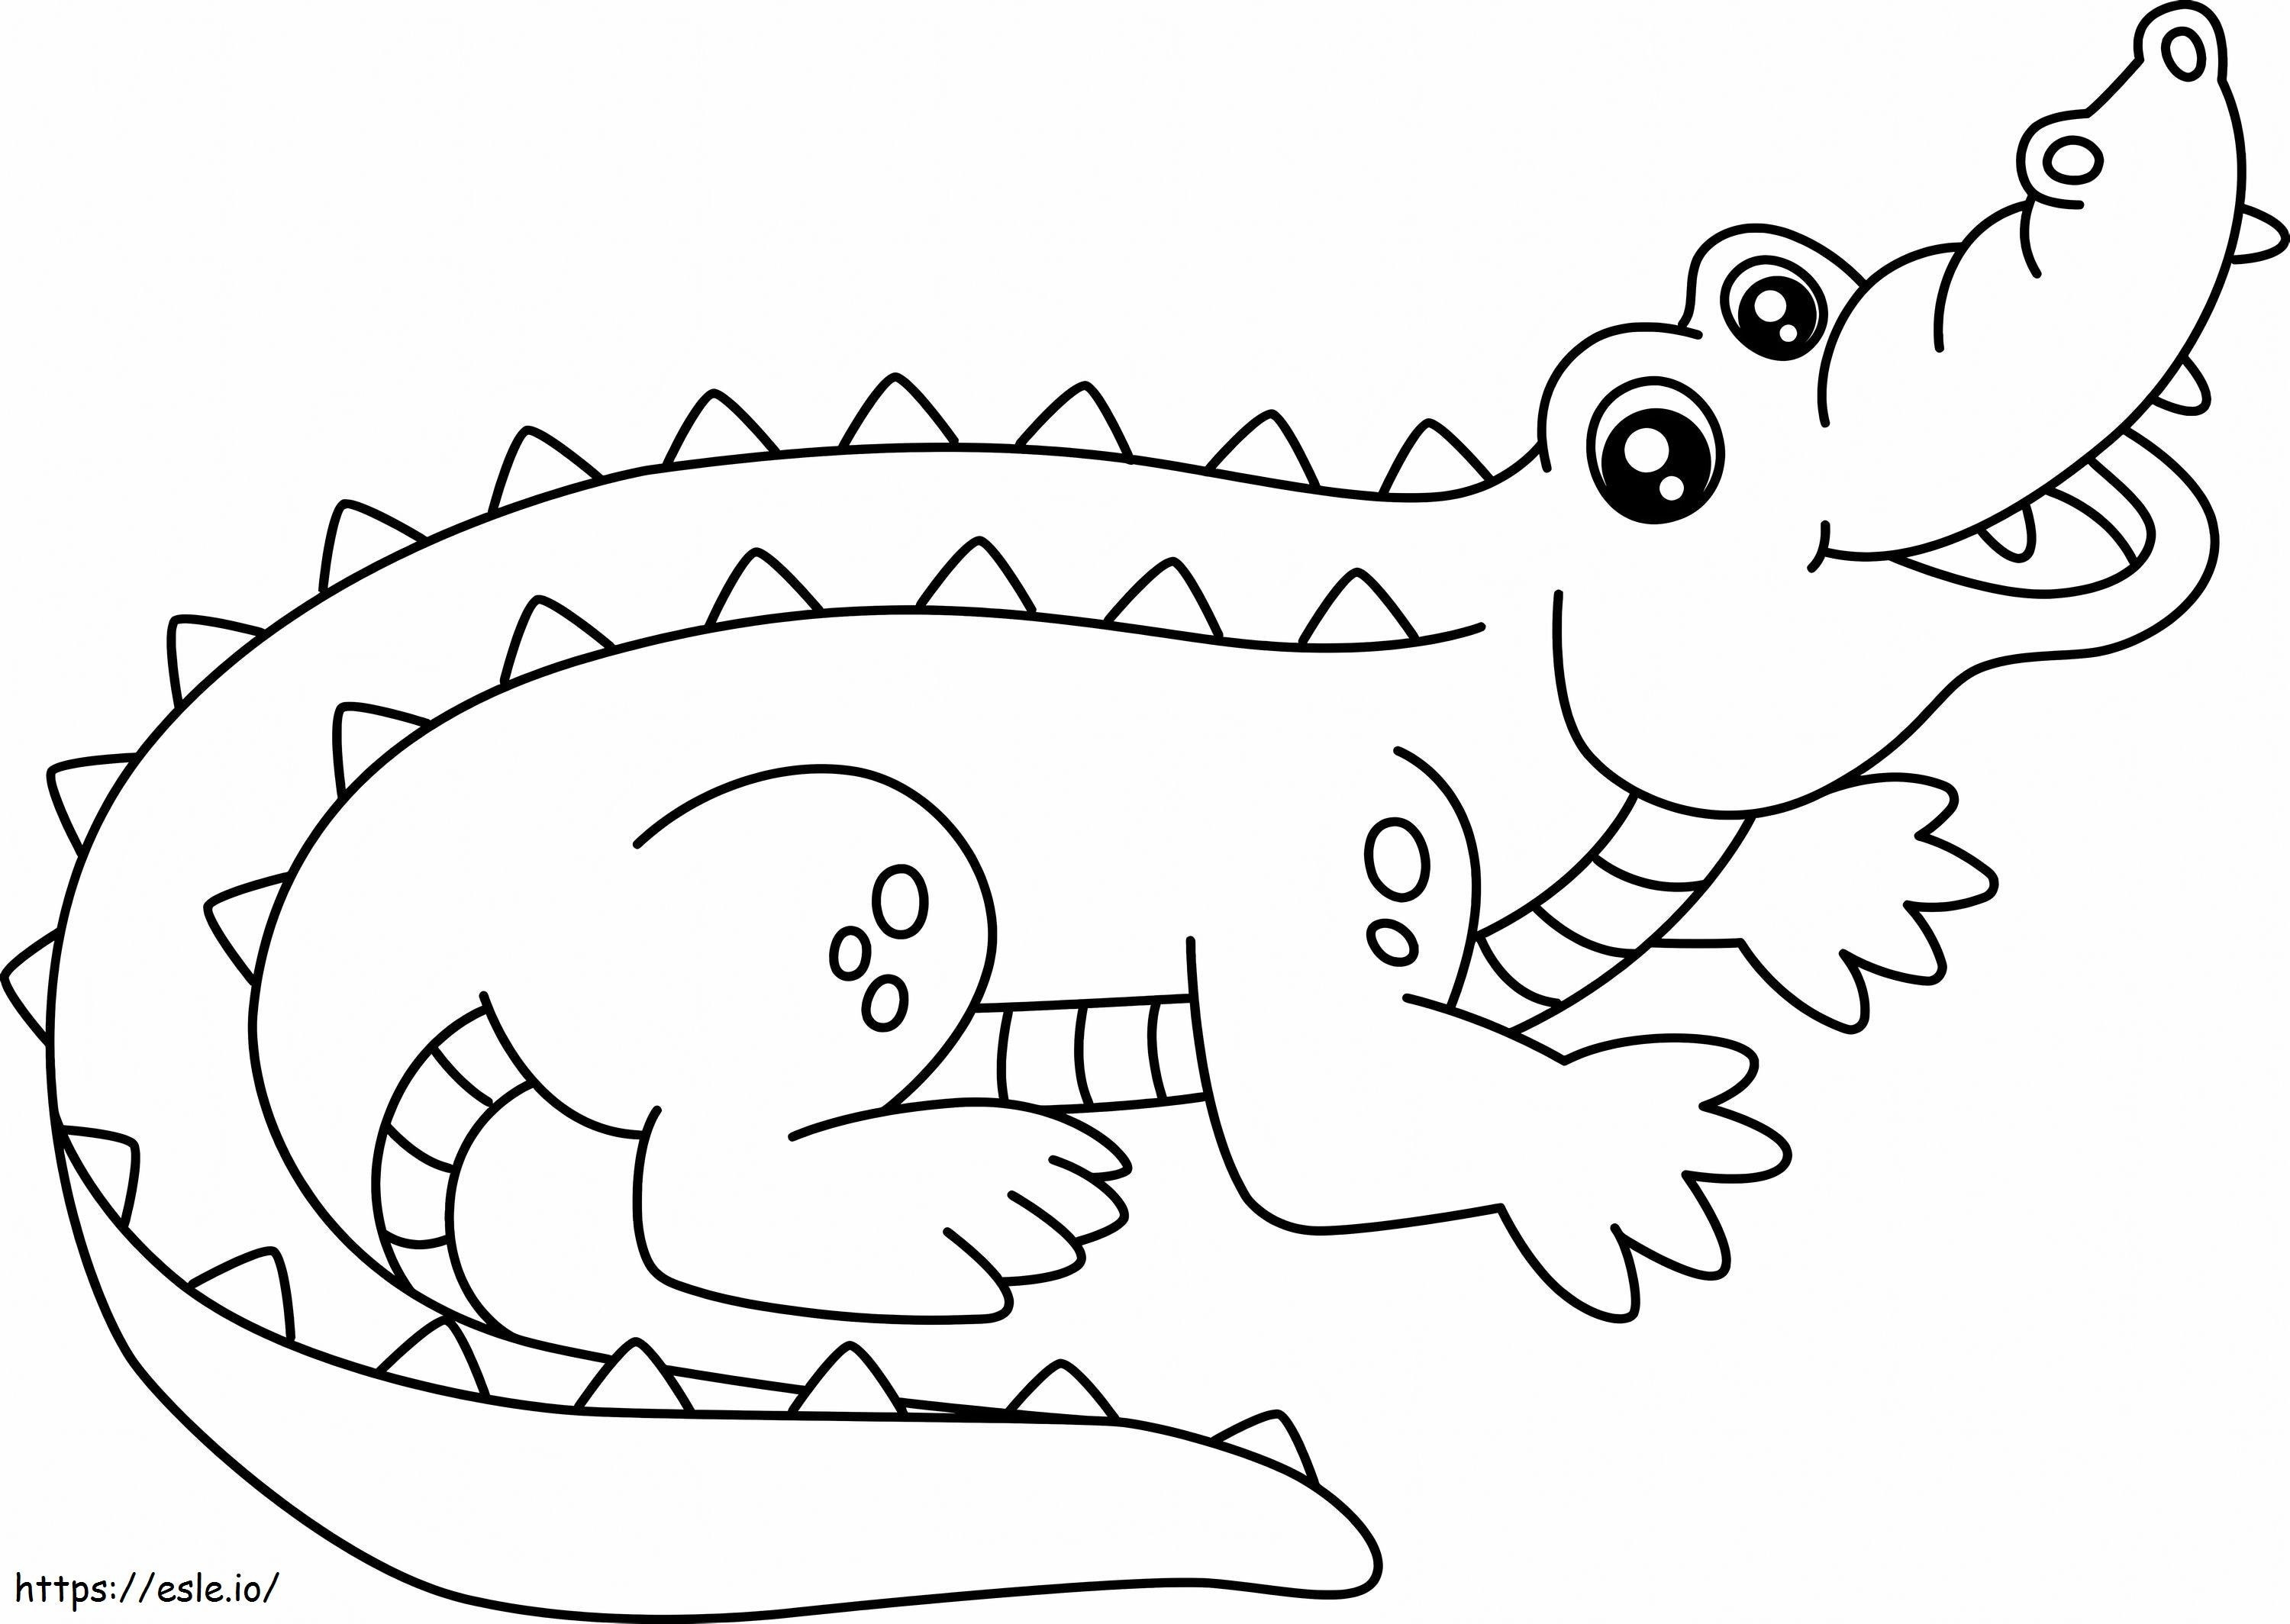 Good Crocodile 1 coloring page